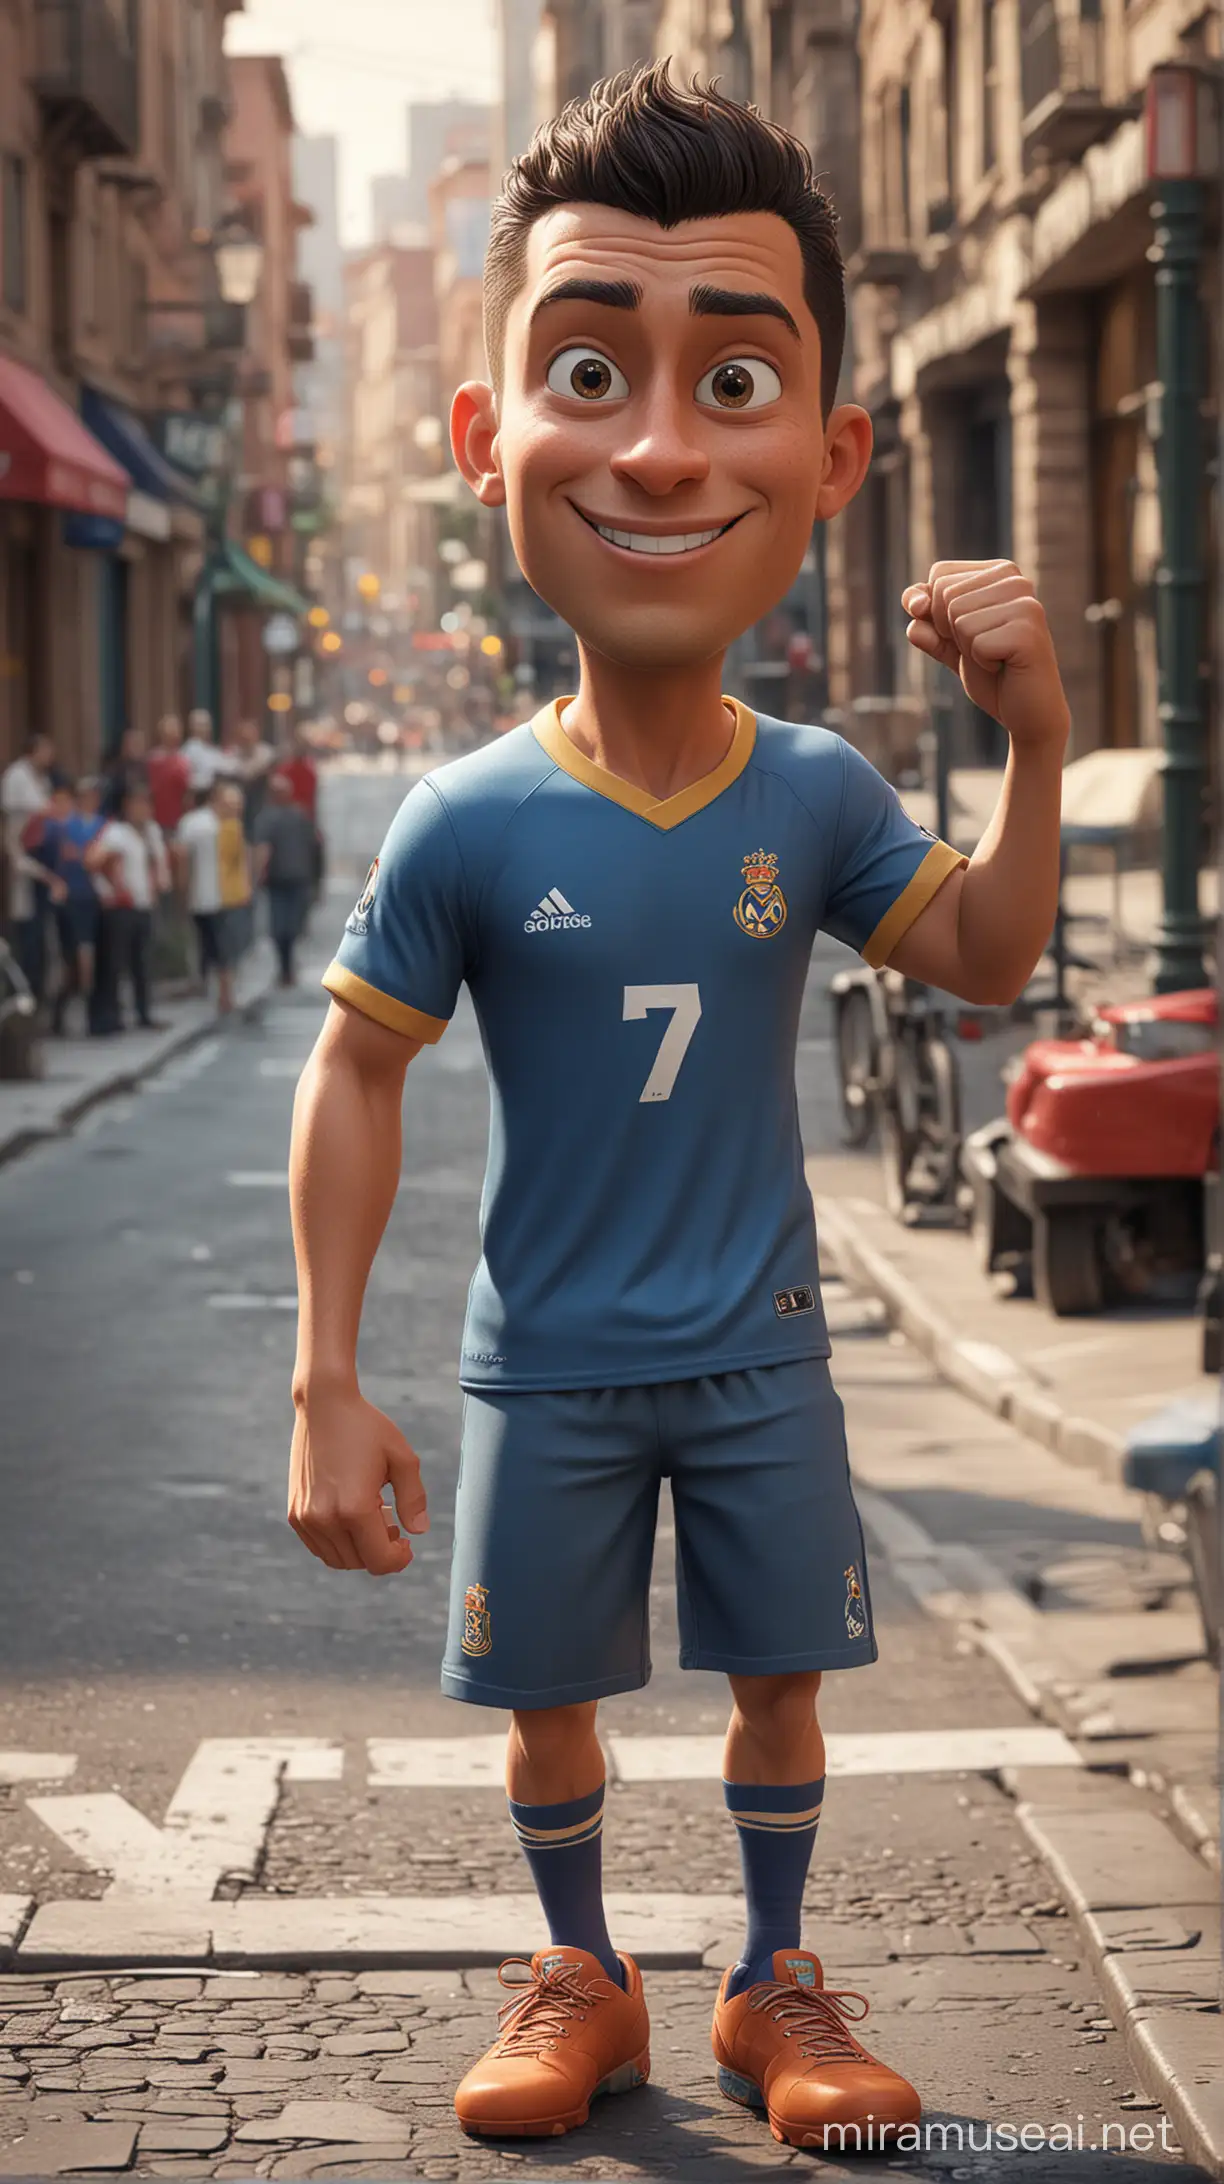 Dynamic Cristiano Ronaldo Caricature in Pixar Style on City Street